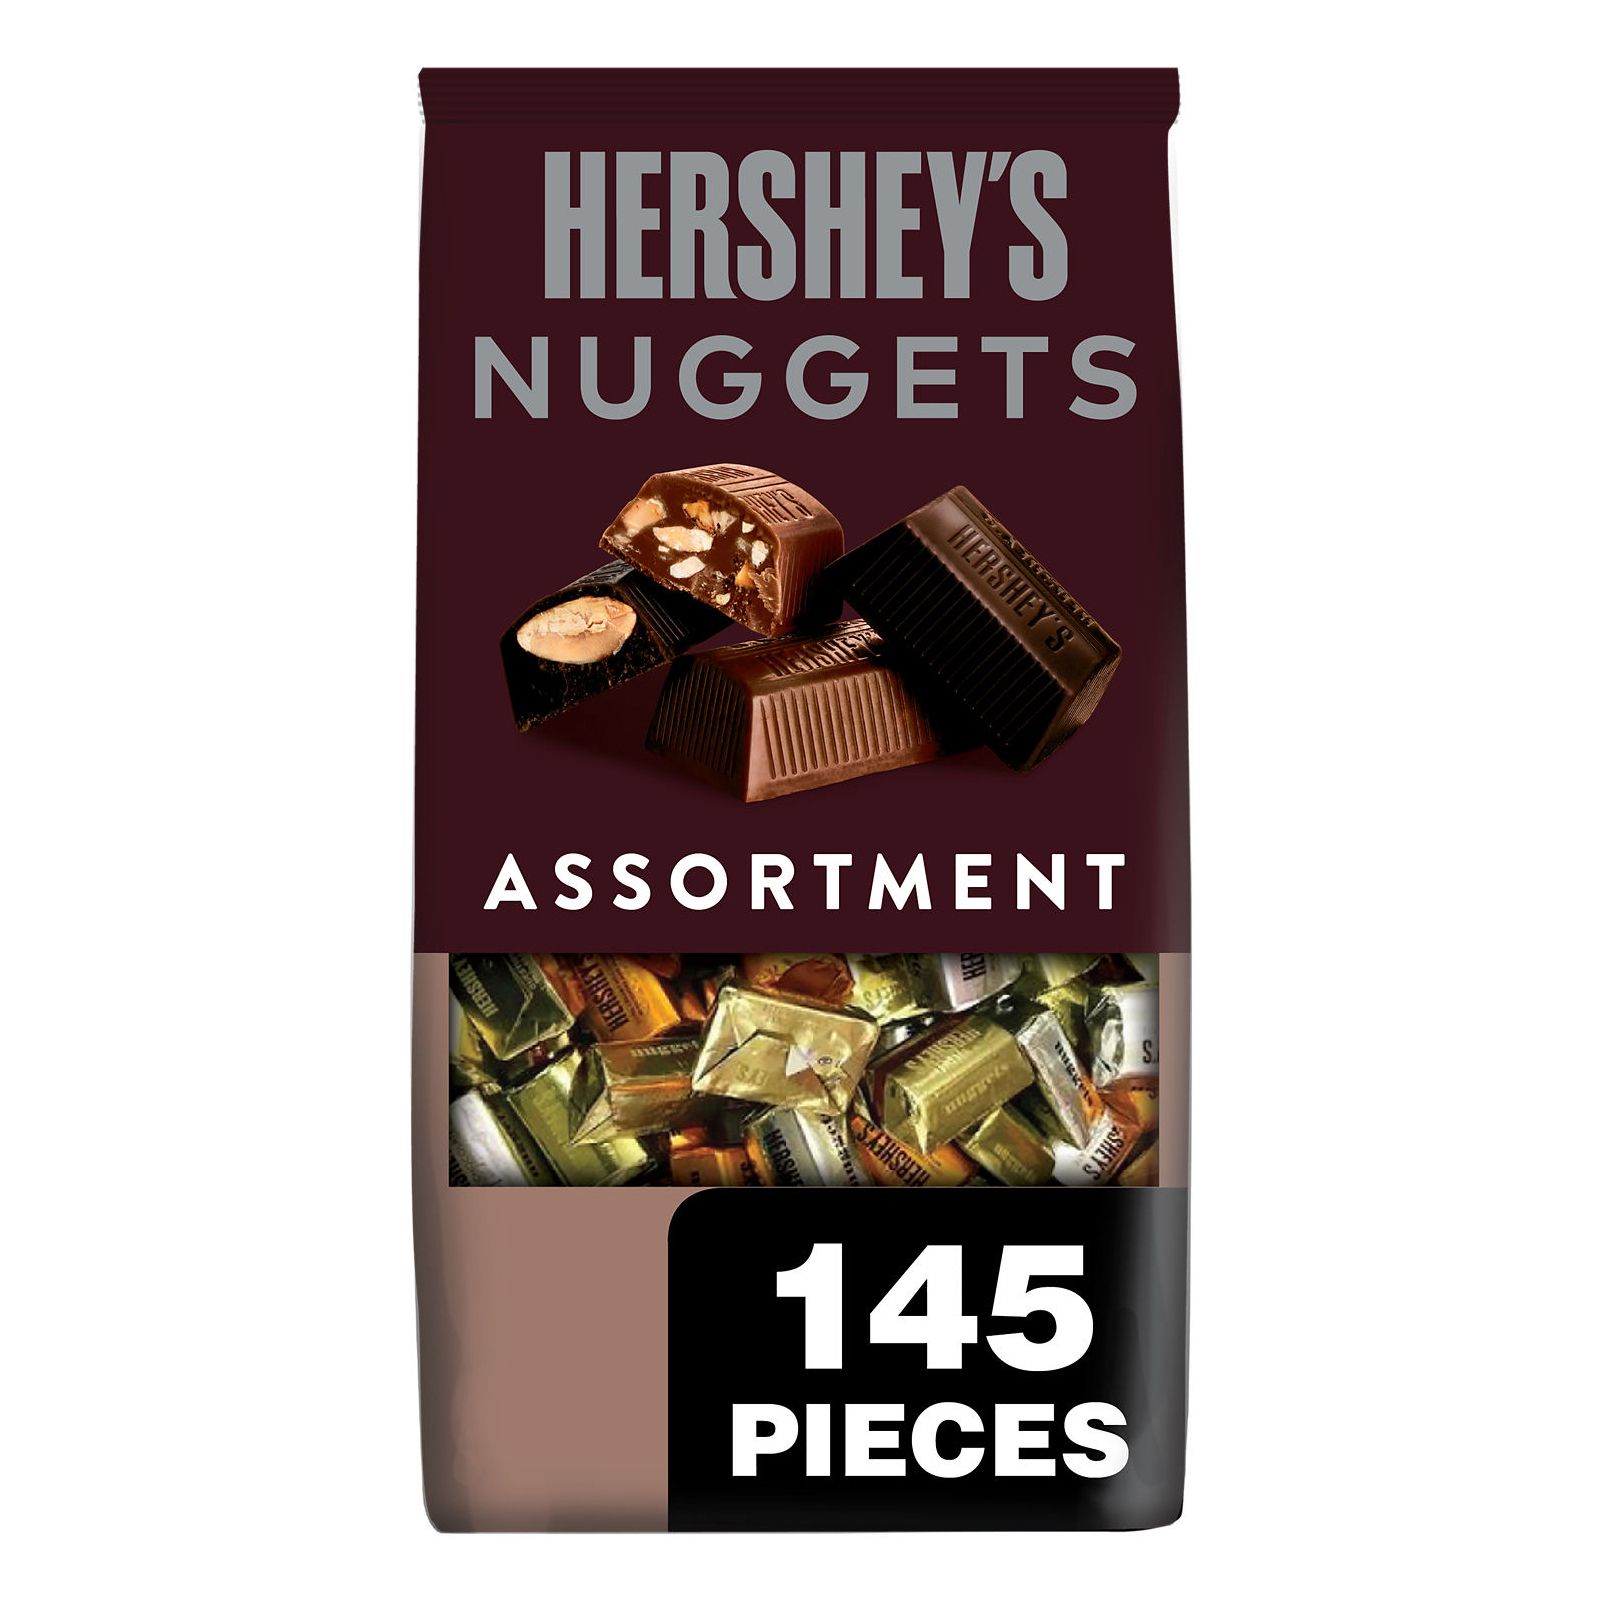 Hershey's Nuggets Assortment